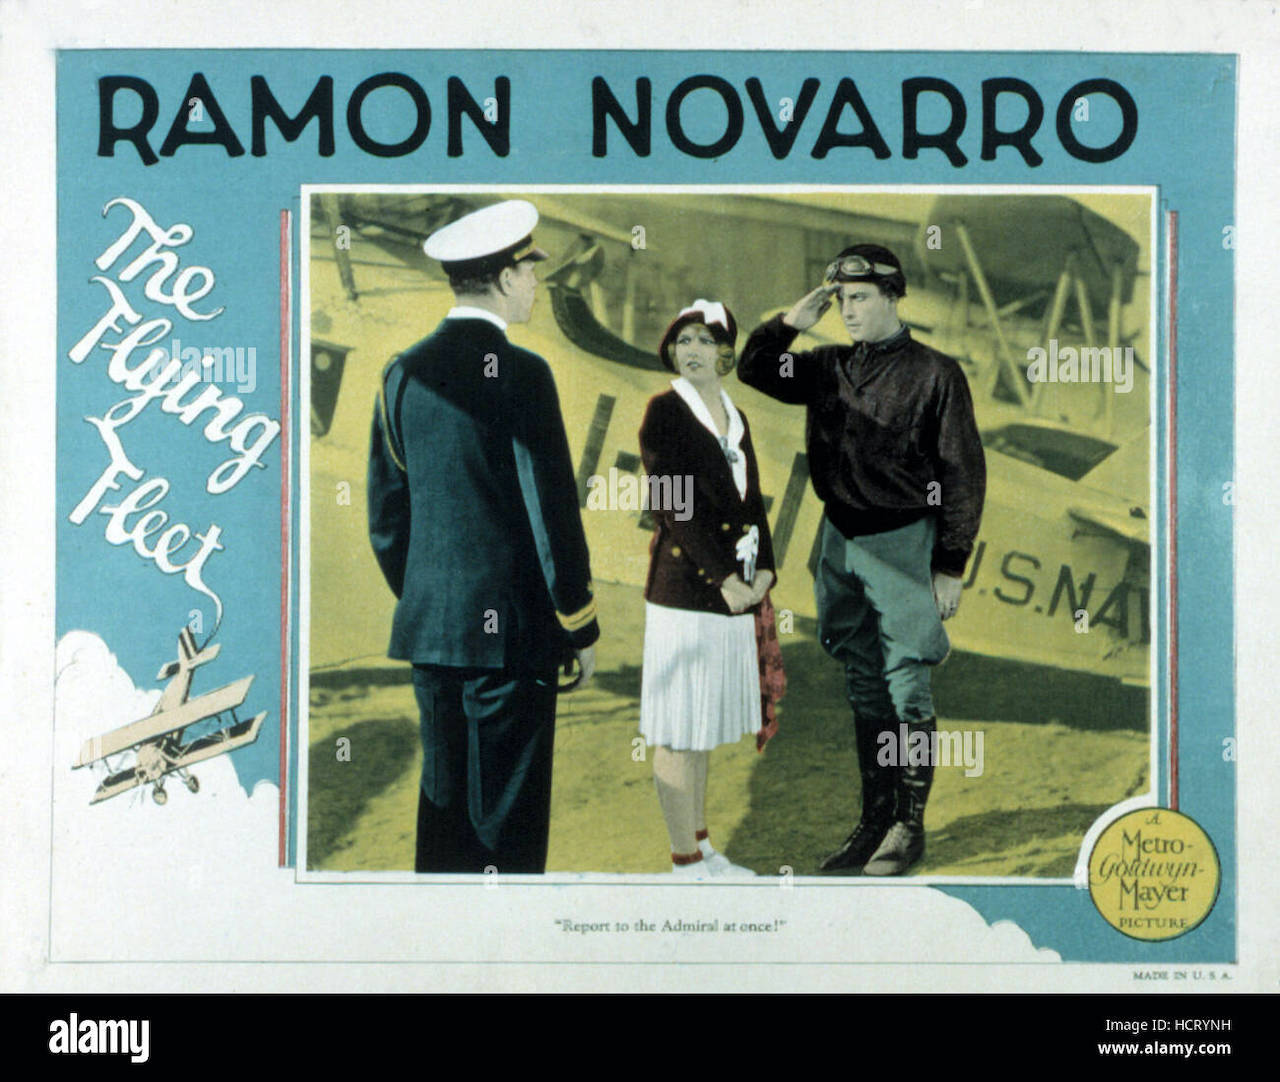 flying-fleet-ramon-novarro-1929-HCRYNH.jpg